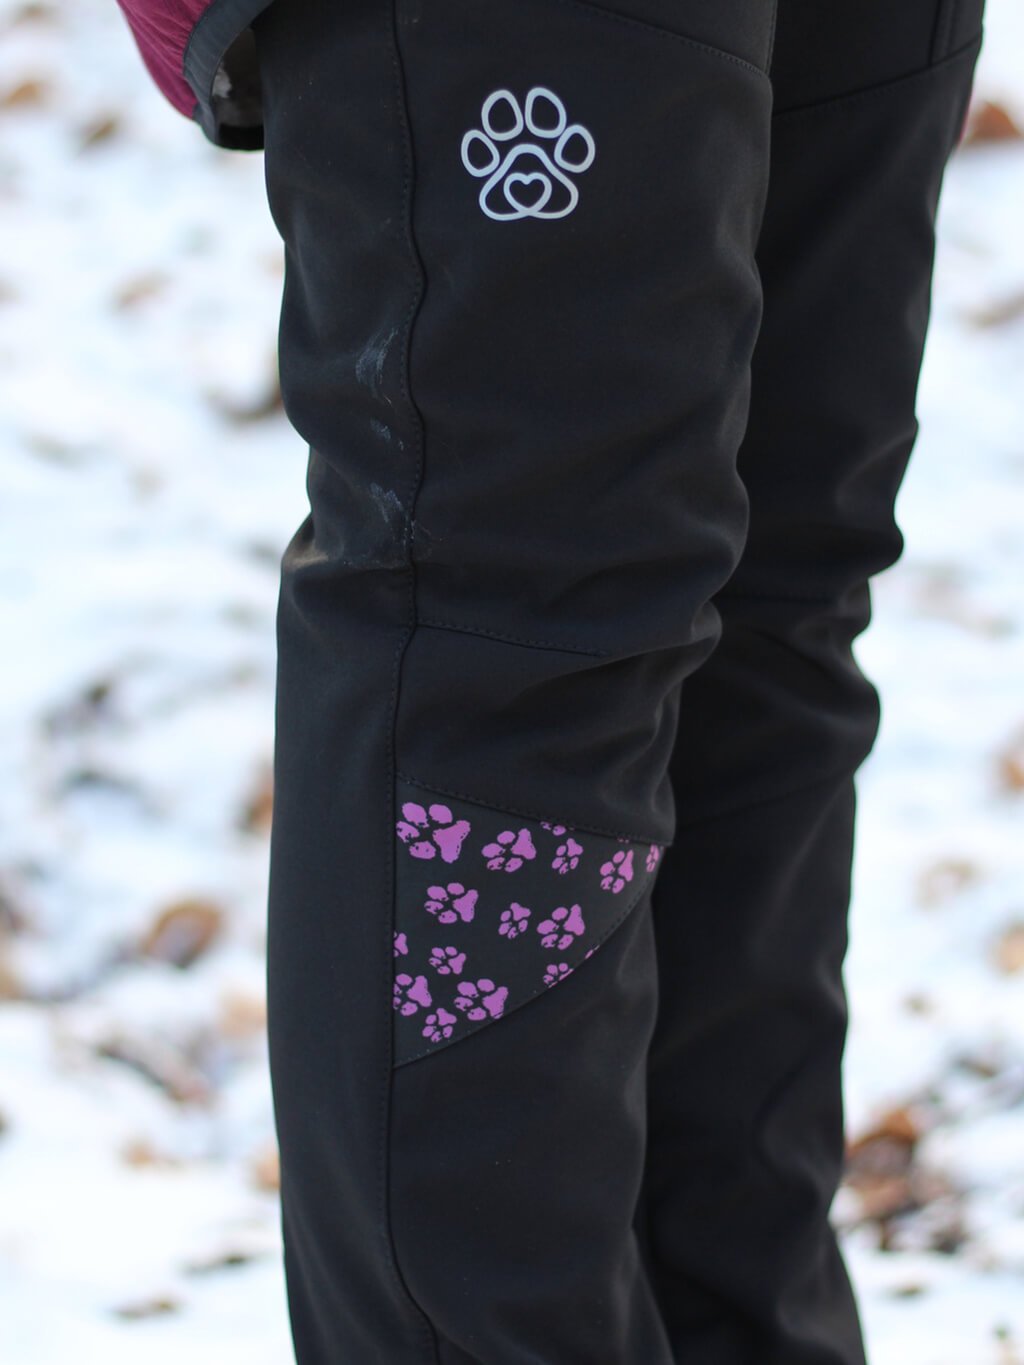 Women's winter training pants - customized